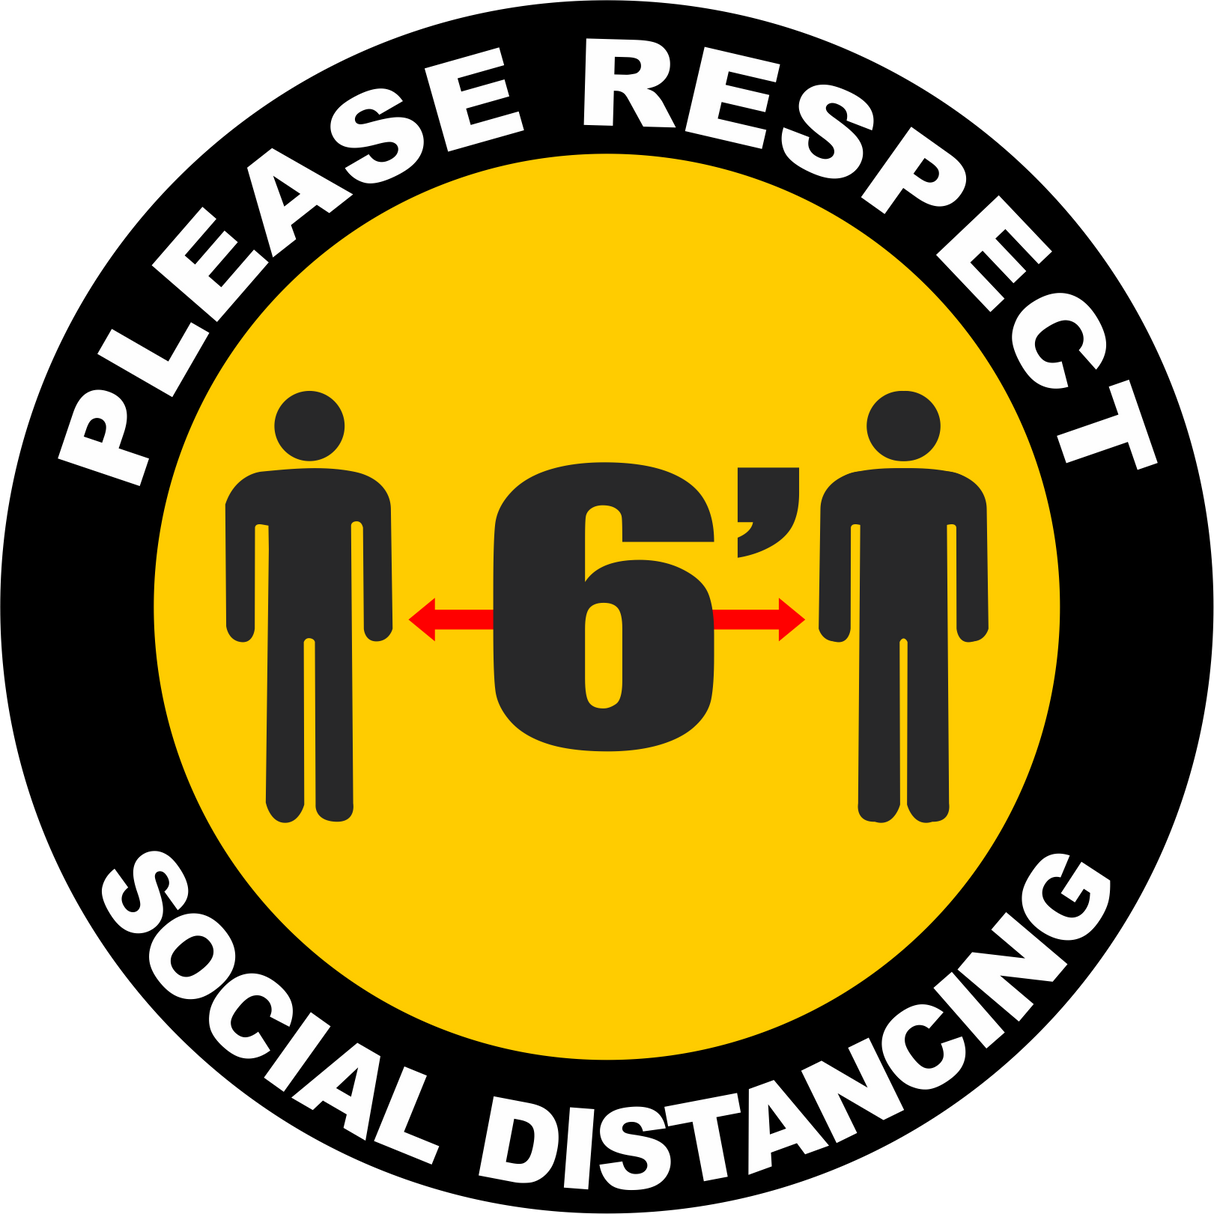 6 Feet Apart Social Distancing Decal